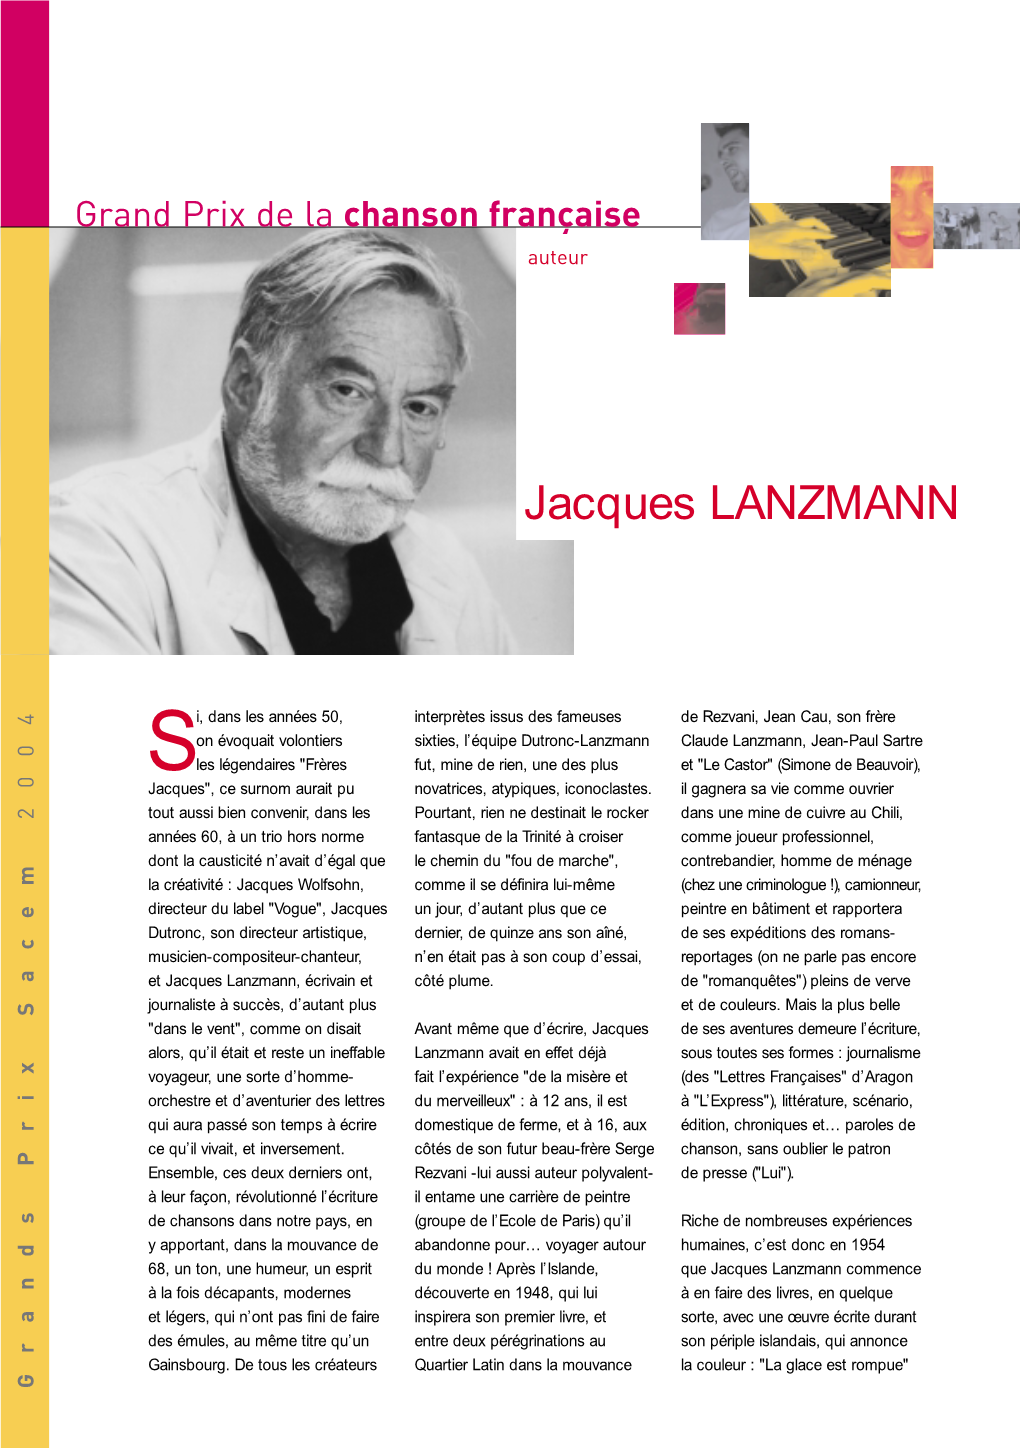 Jacques LANZMANN